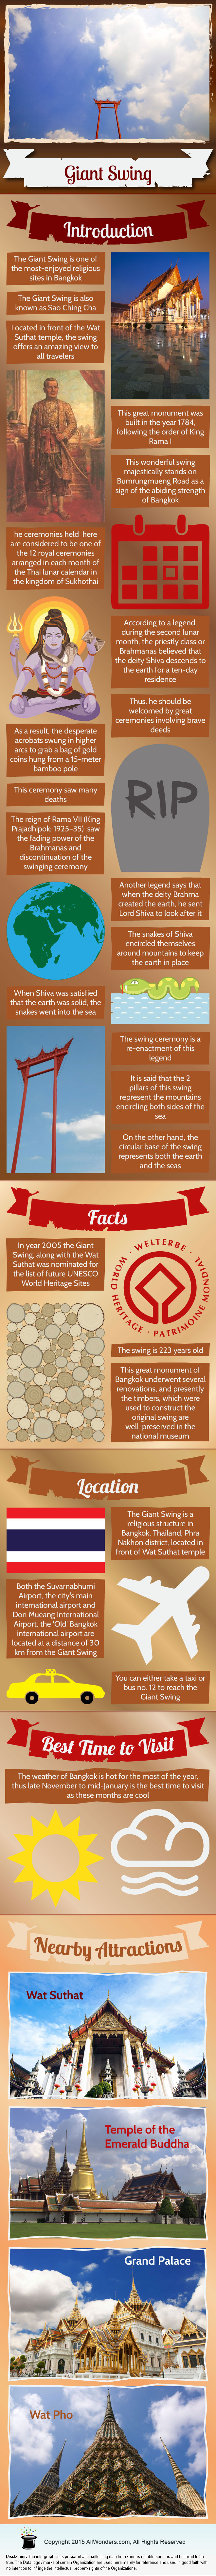 Giant Swing Bangkok - Facts & Infographic